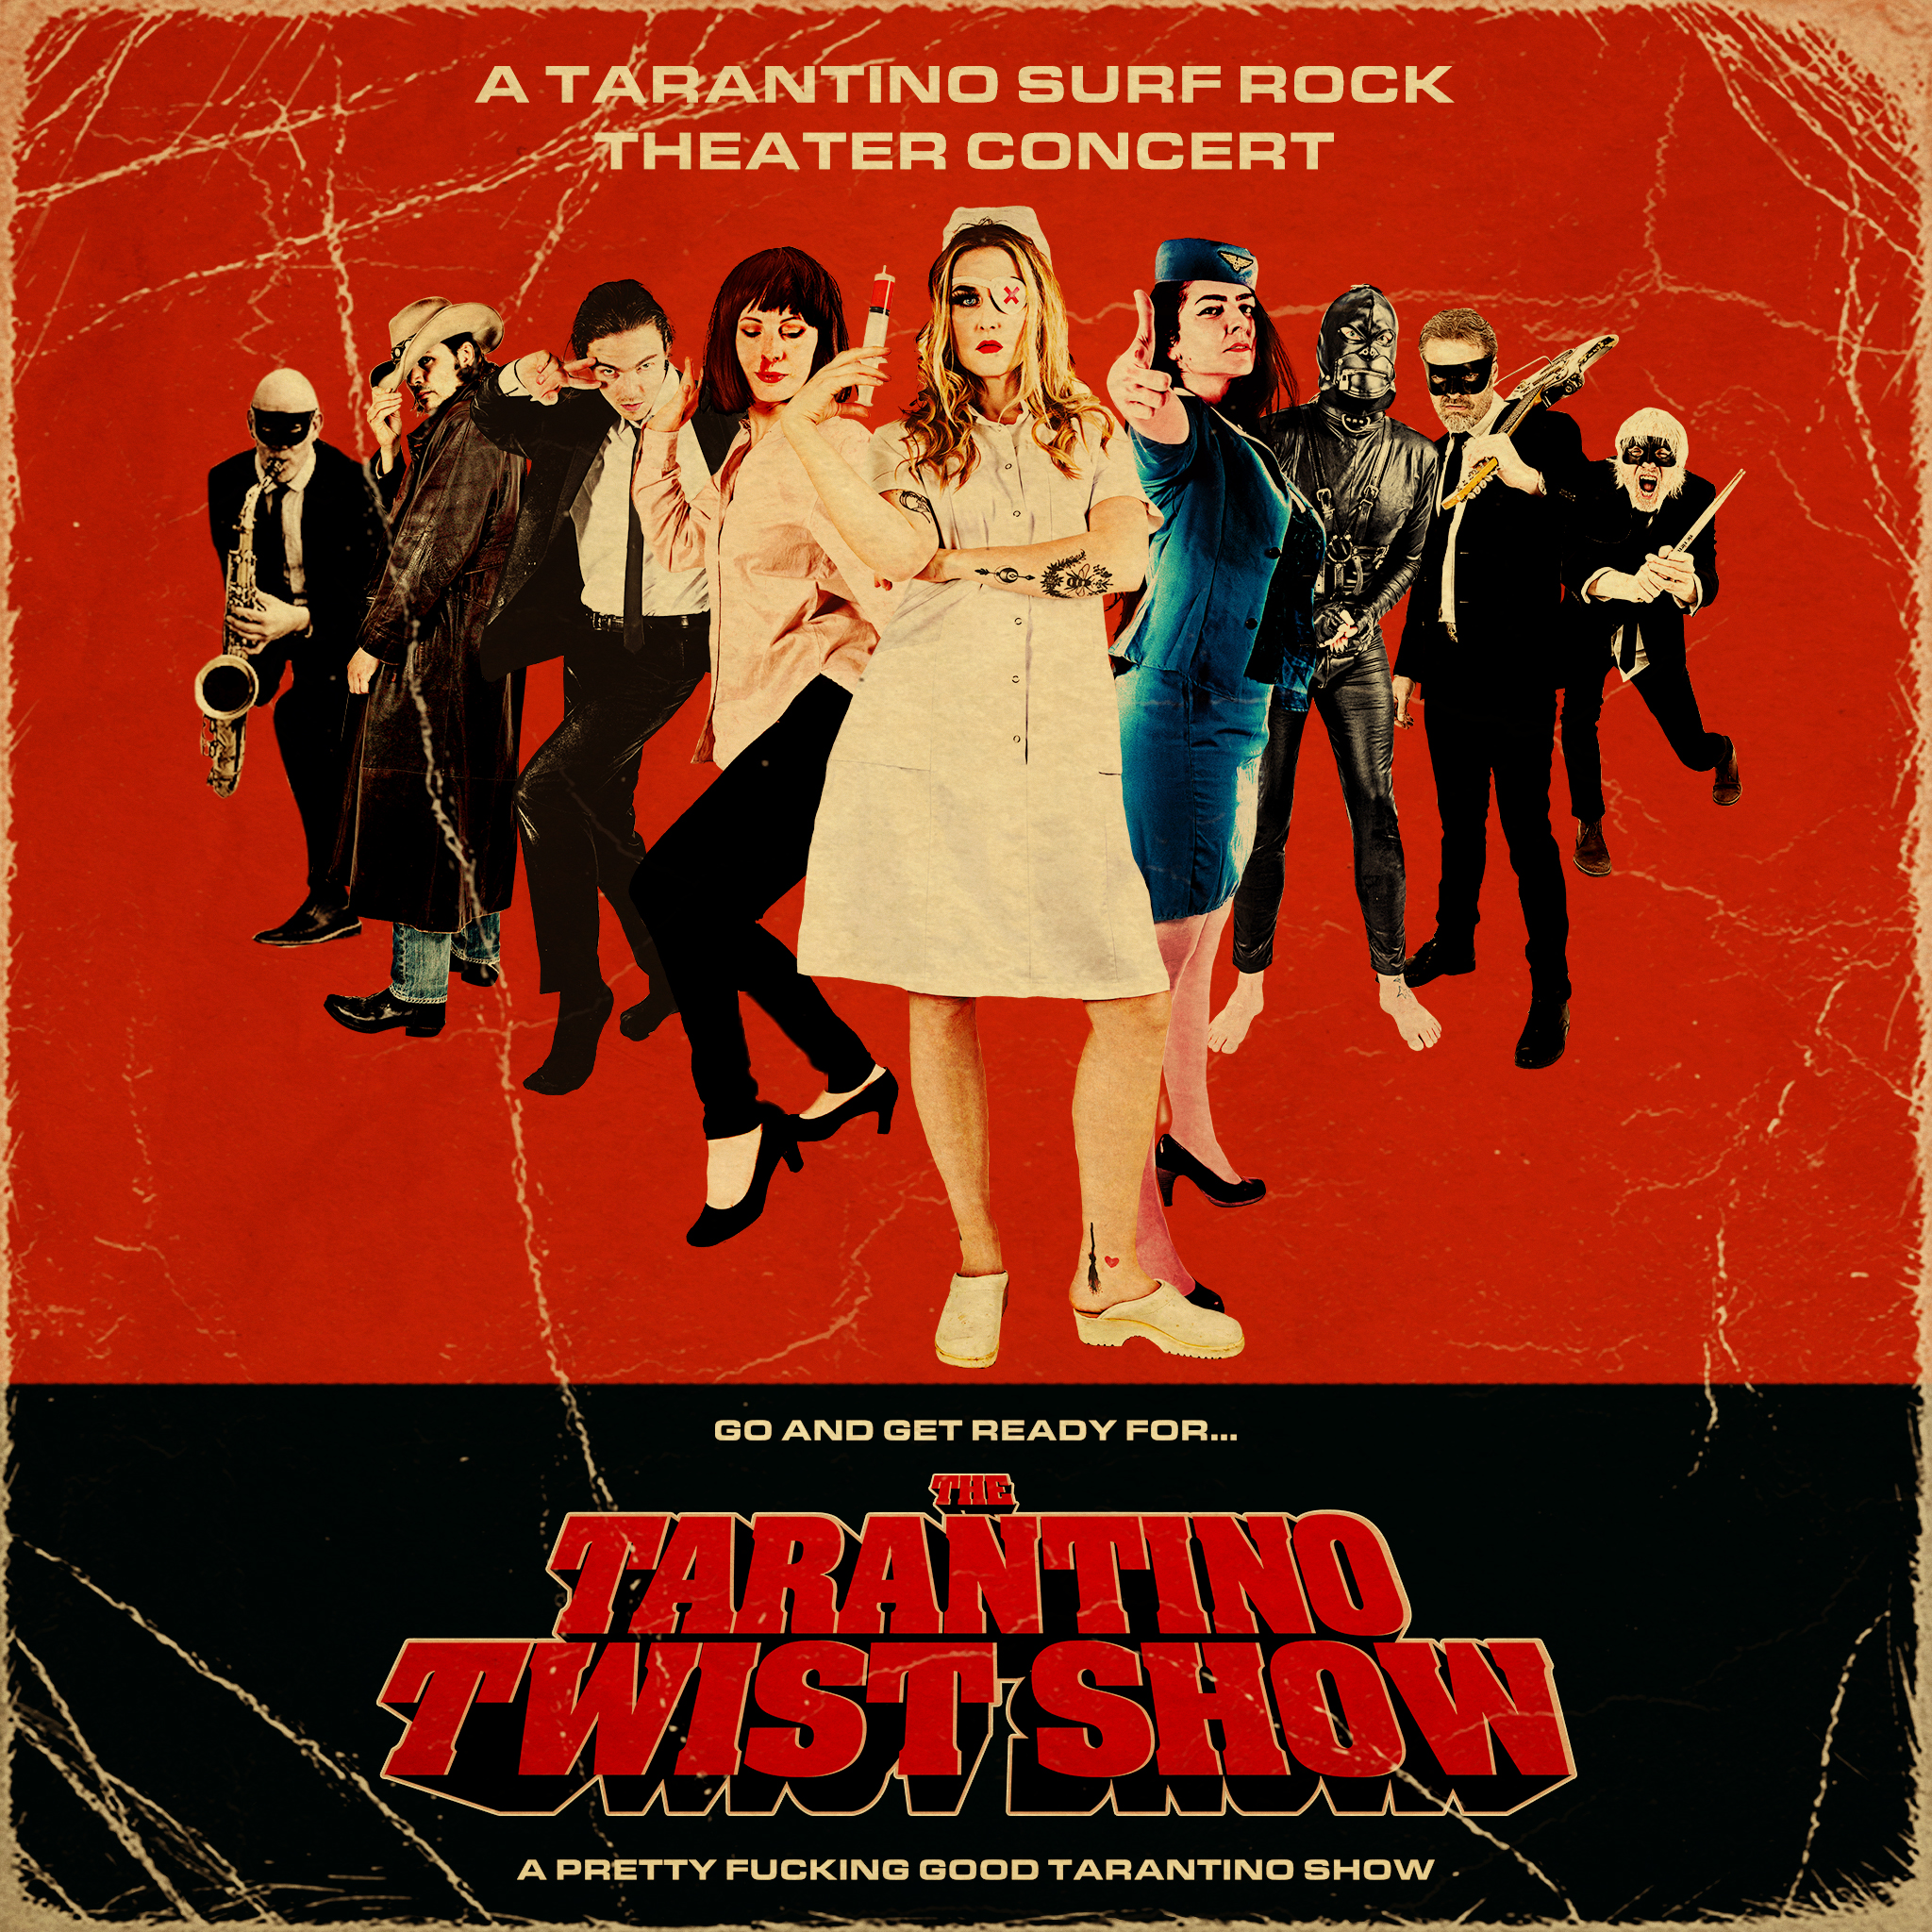 The Tarantino Twist Show